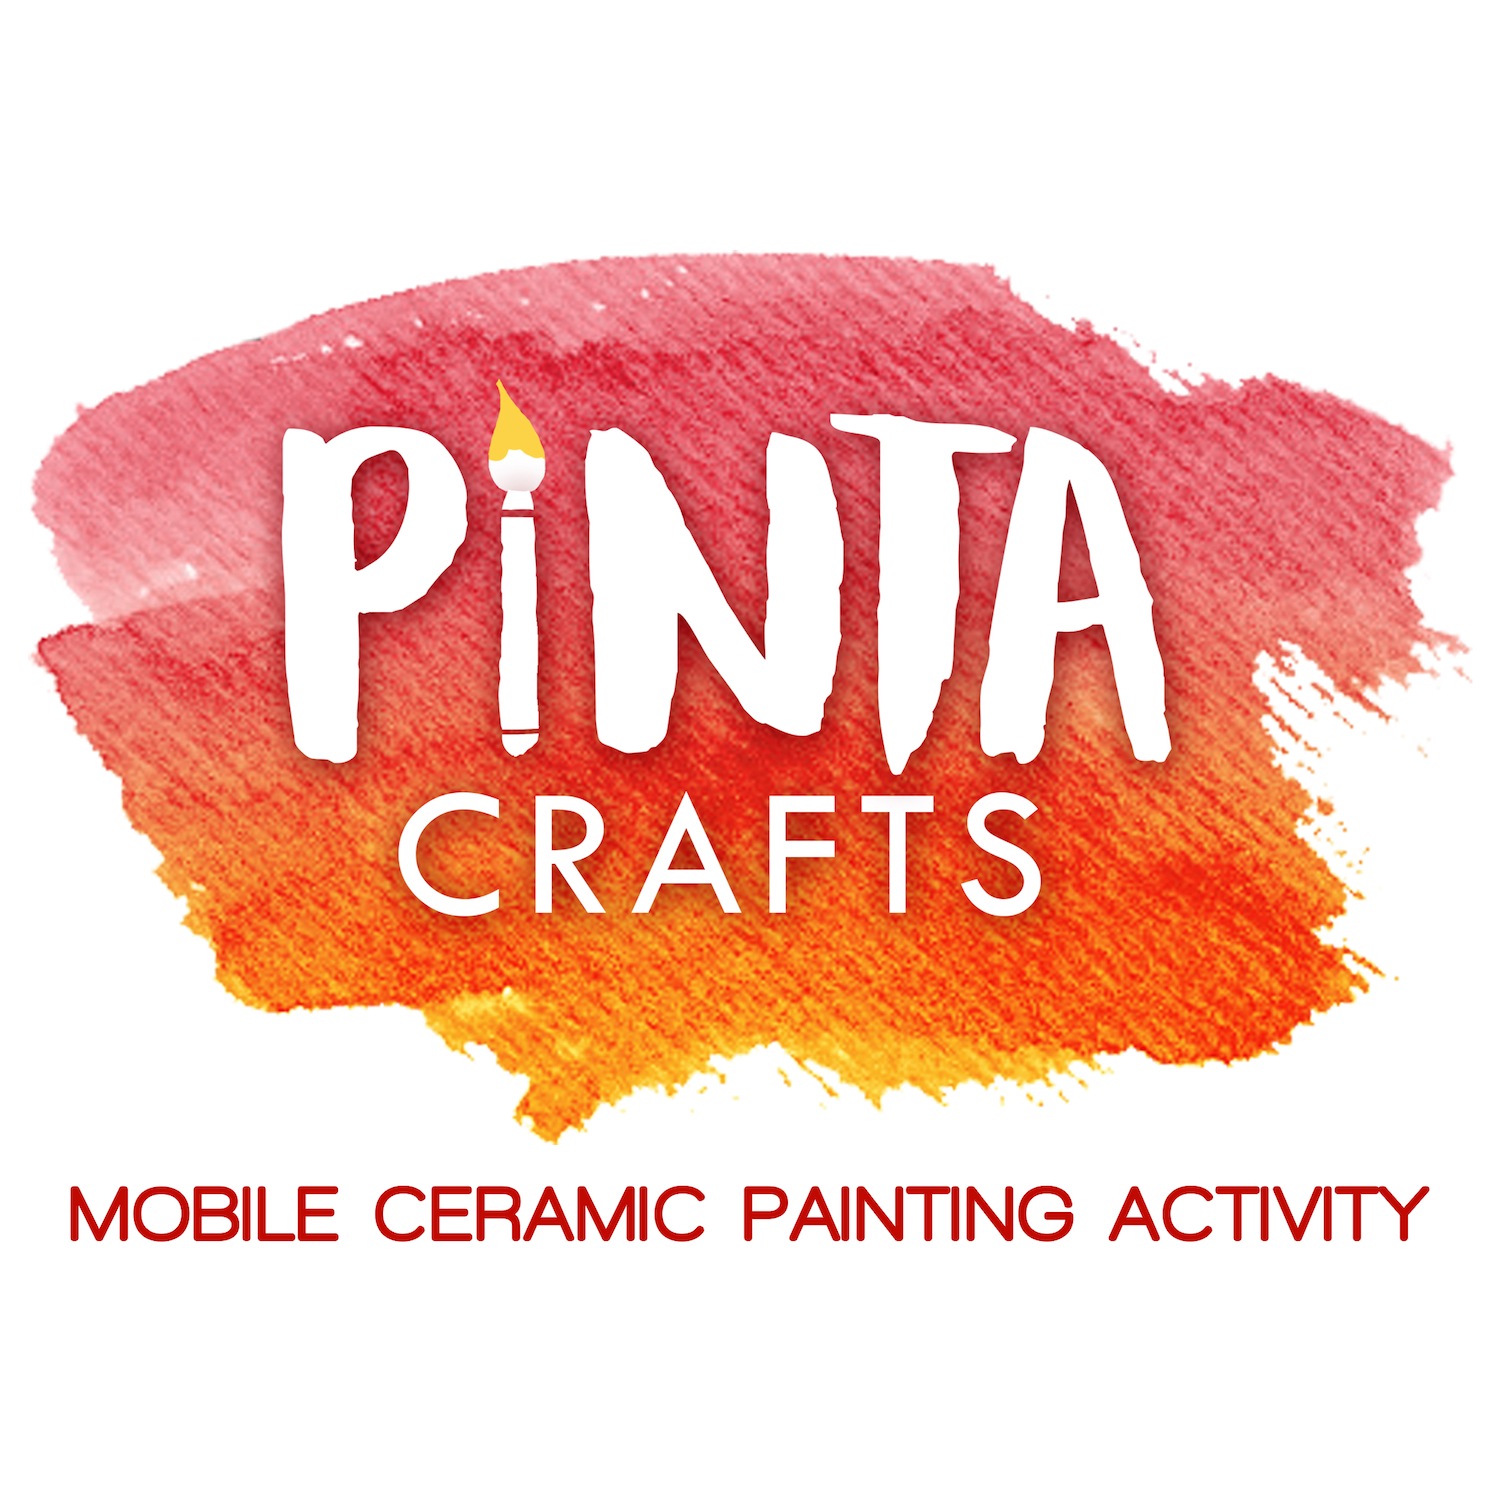 Pinta Crafts - Mobile Ceramic Painting Activity